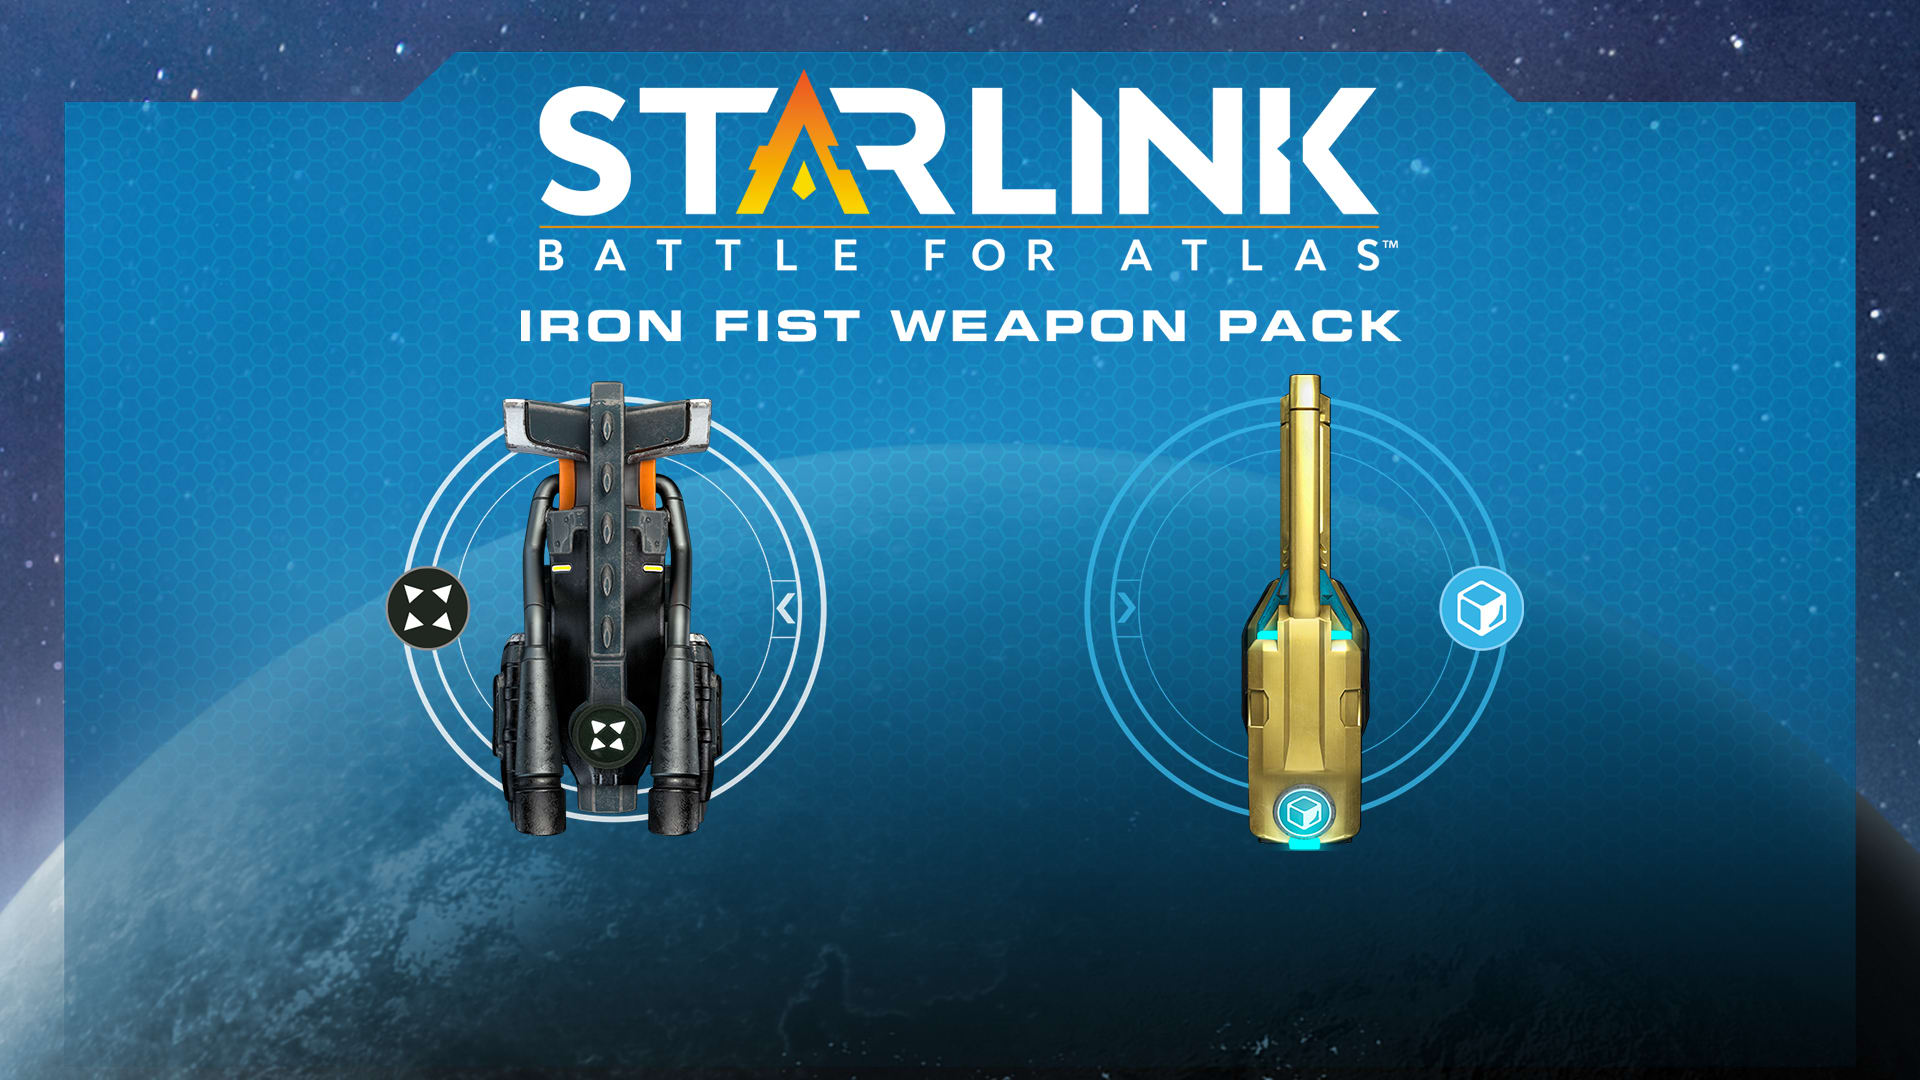 Starlink: Battle for Atlas™ Digital Iron Fist Weapon Pack